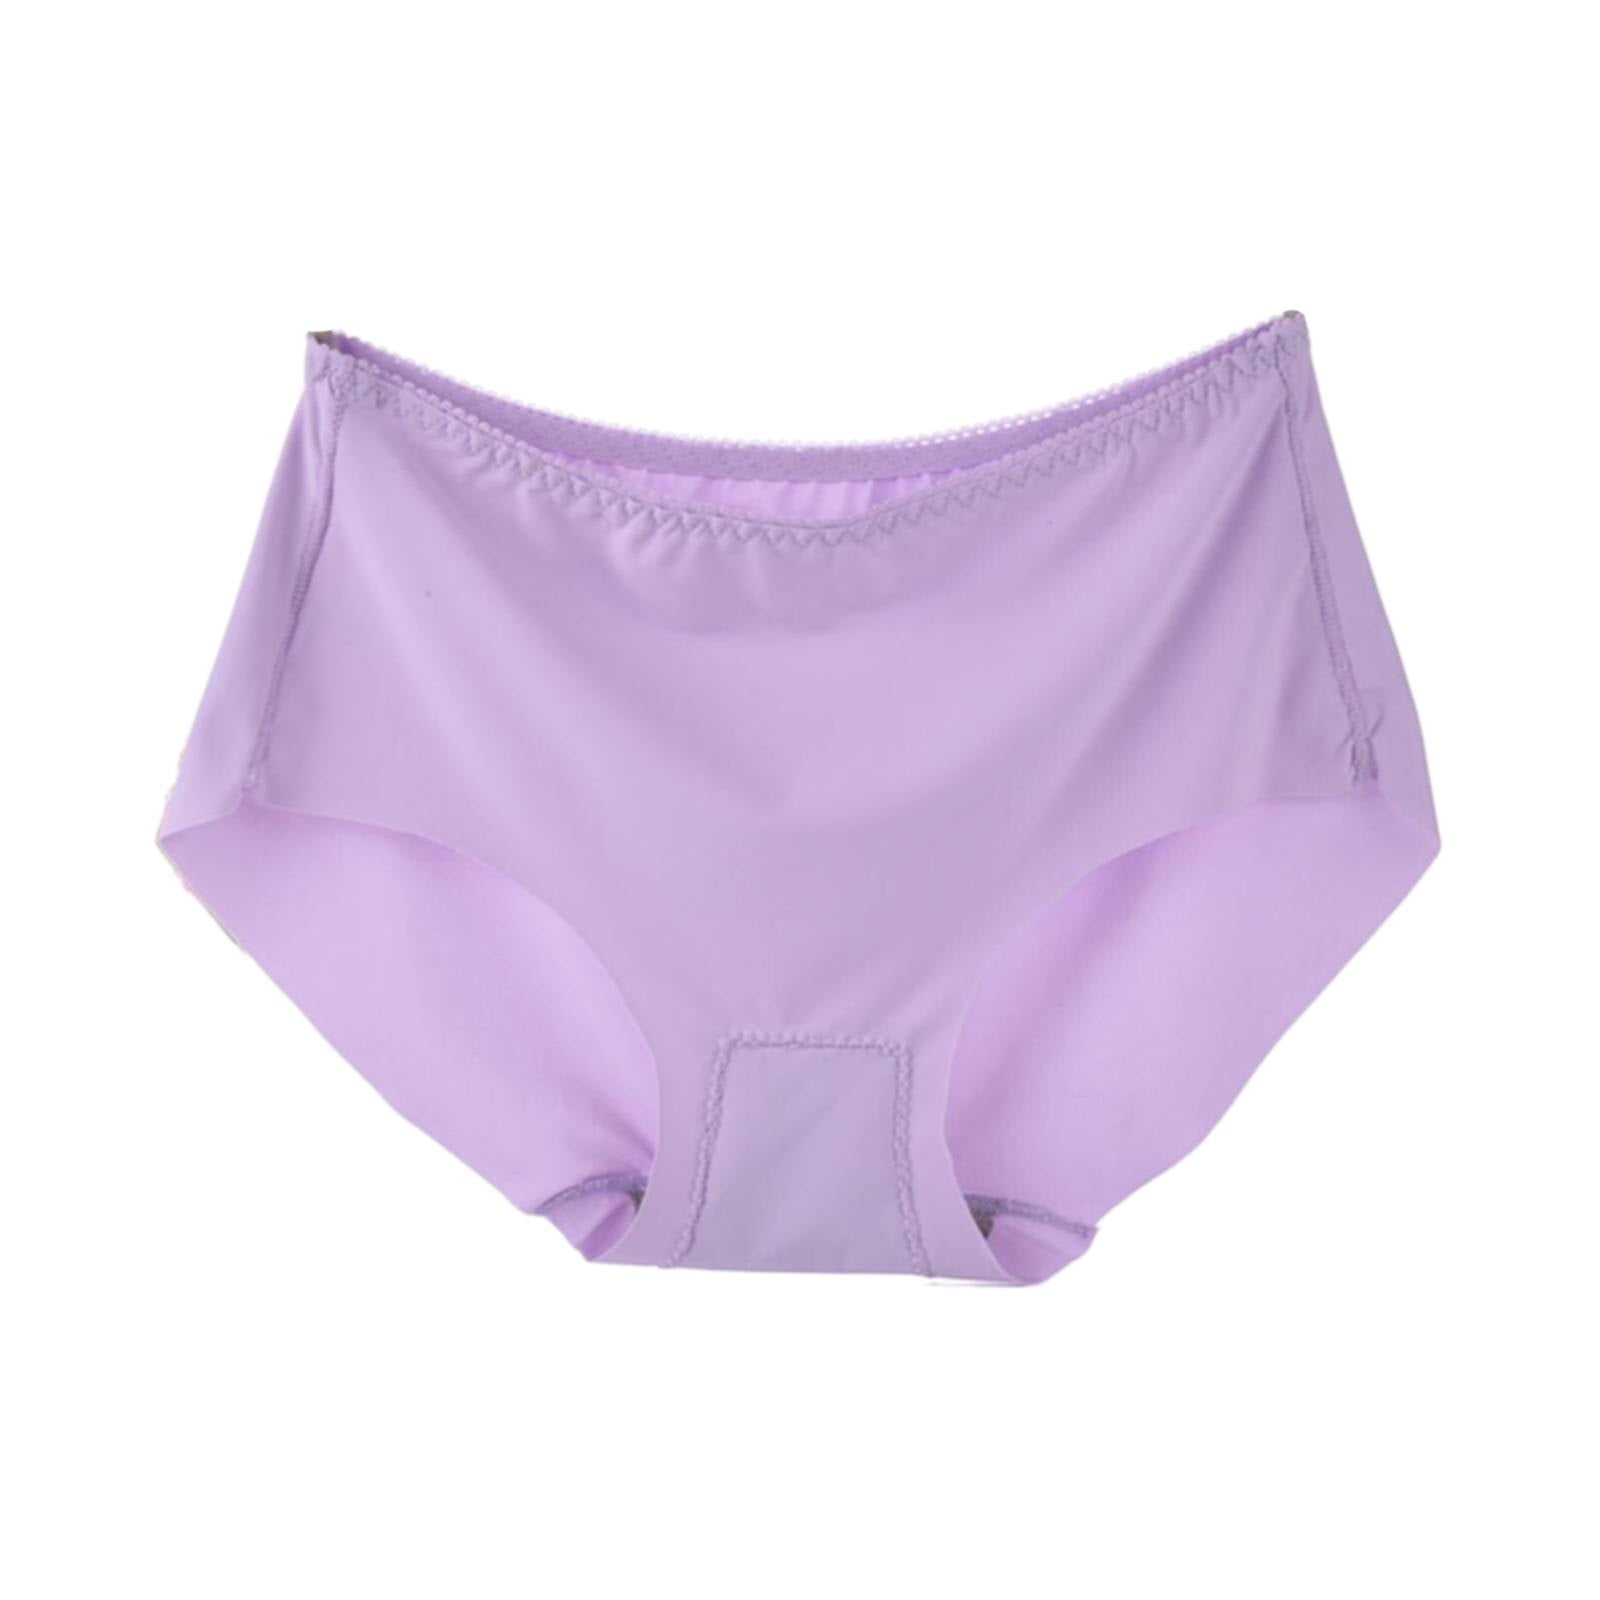 PEASKJP Women's High Cut Underwear Tummy Control Soft Nylon